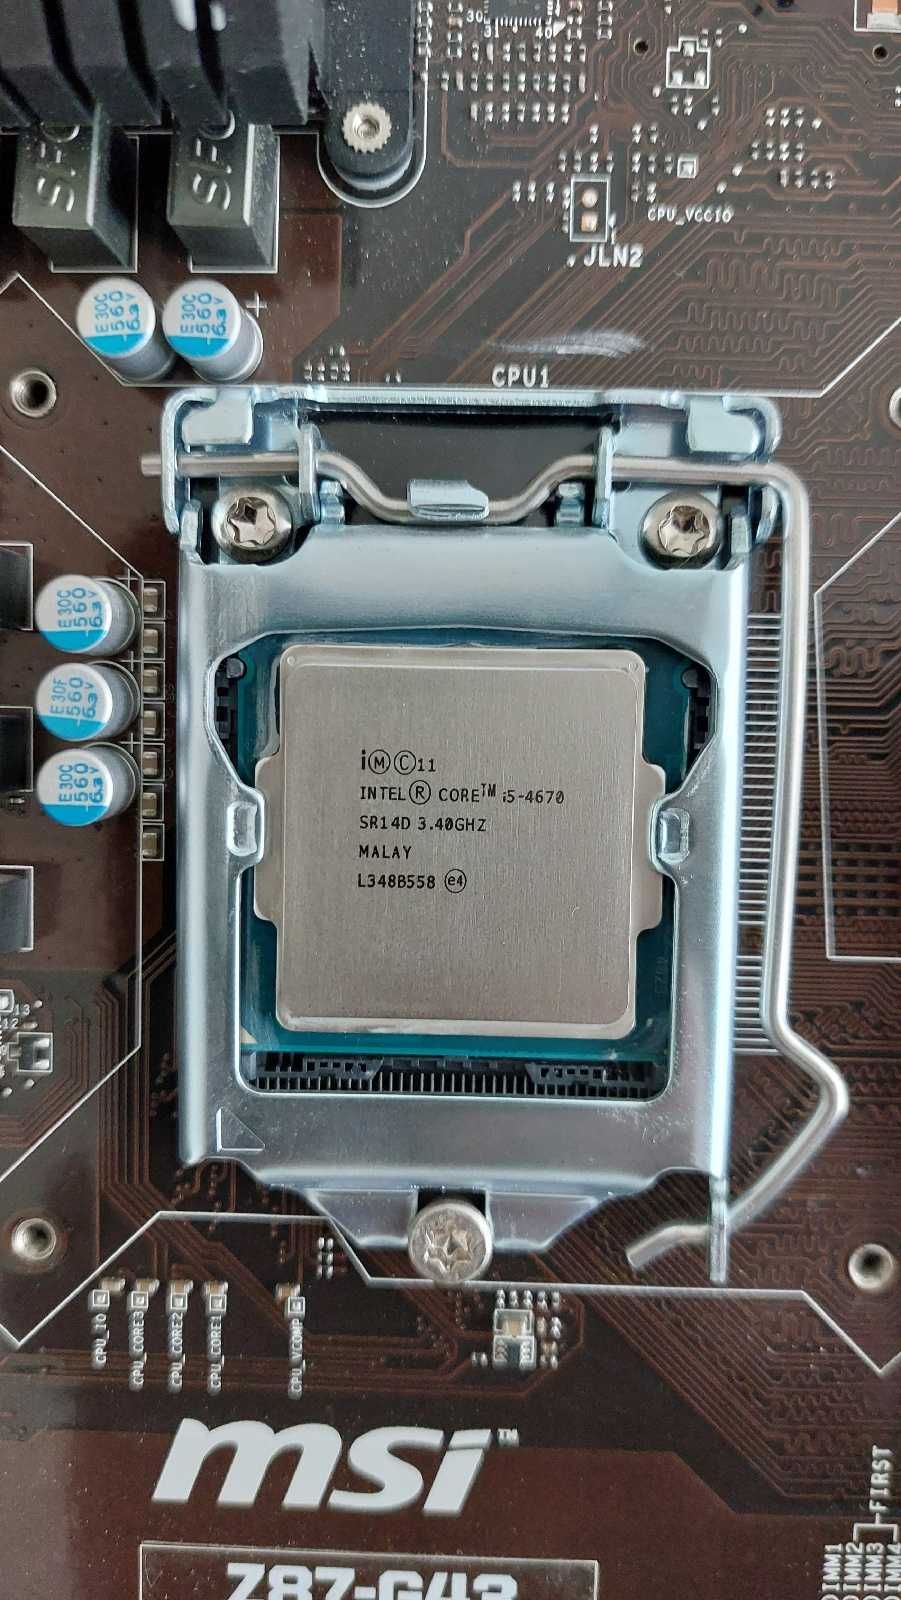 Intel MSI Z87-G43, Core i5 4670, 32 GB GeiL DDR3, Freezer, XFX 550W